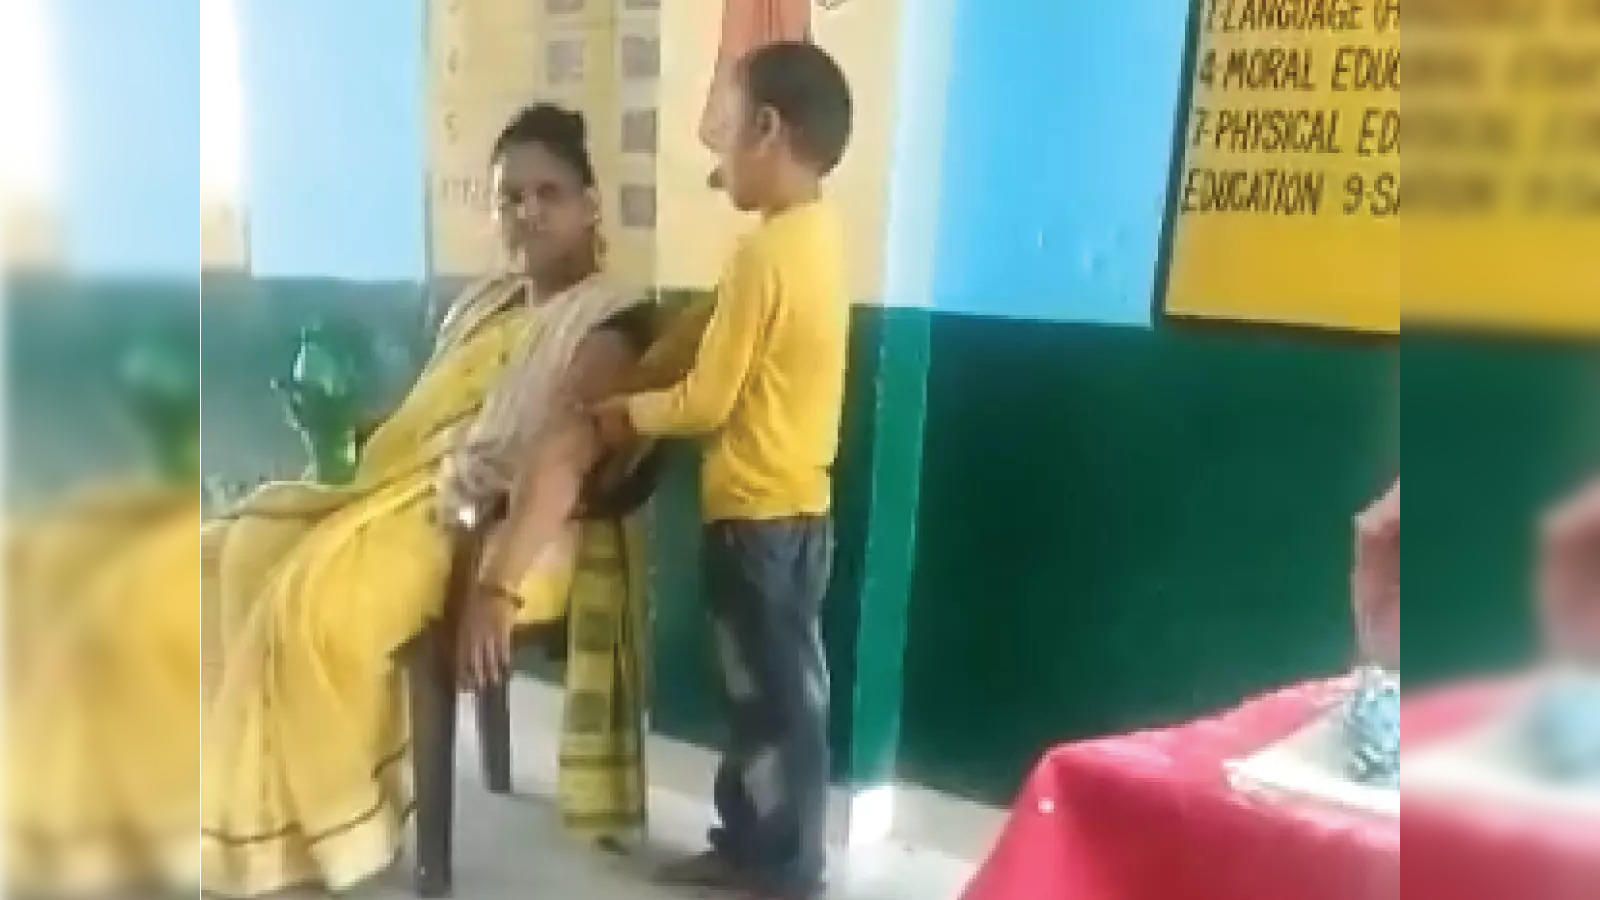 Schoolsex Hot - Teacher Massage: Teacher gets student to massage her arm, is suspended:  Viral video - The Economic Times